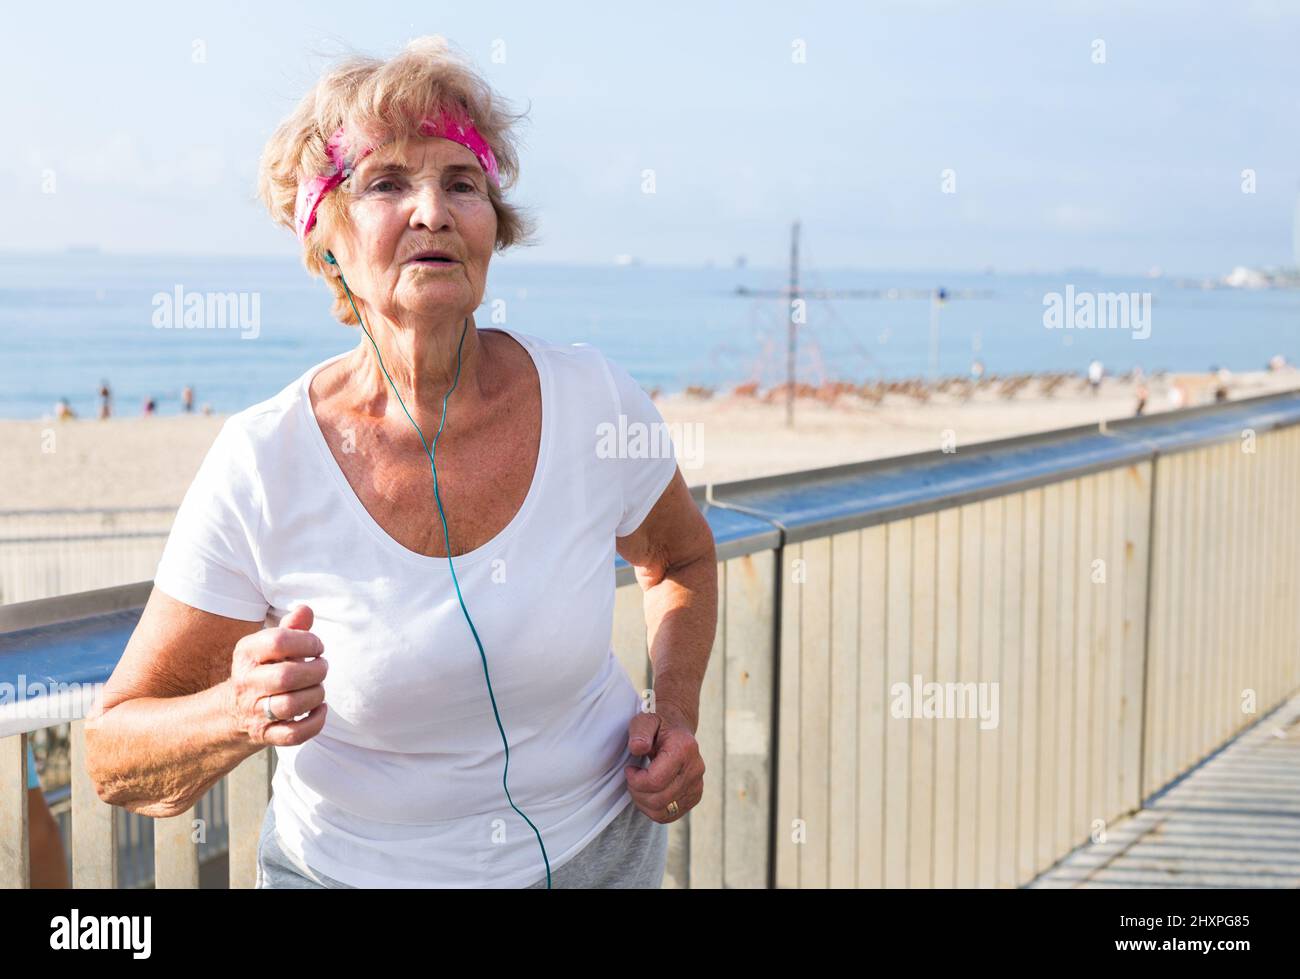 Old lady running beside beach Stock Photo